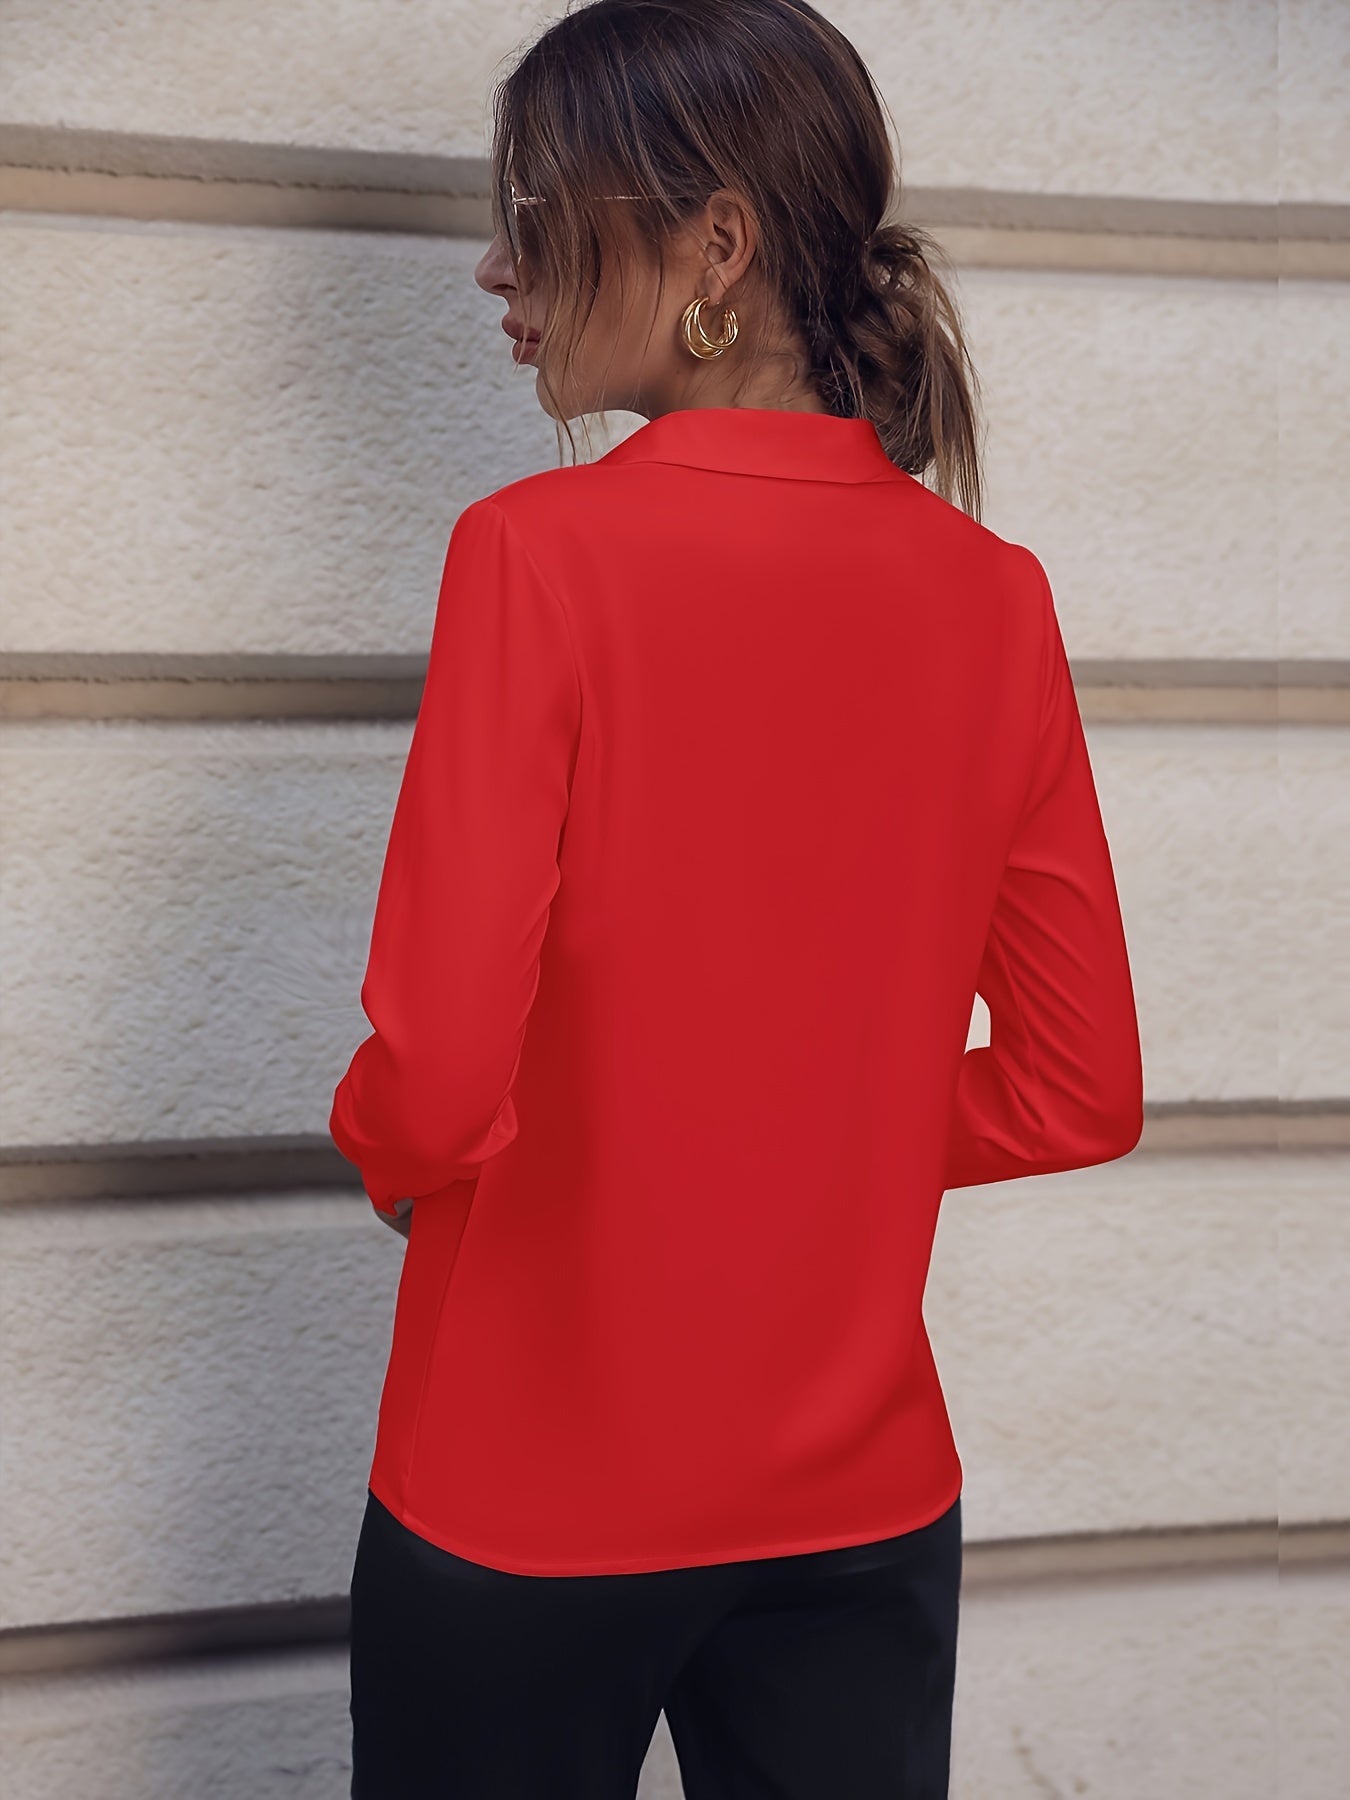 Women's Blouse Elegant Solid Lapel Button Long Sleeve Fashion Fall Winter Blouse